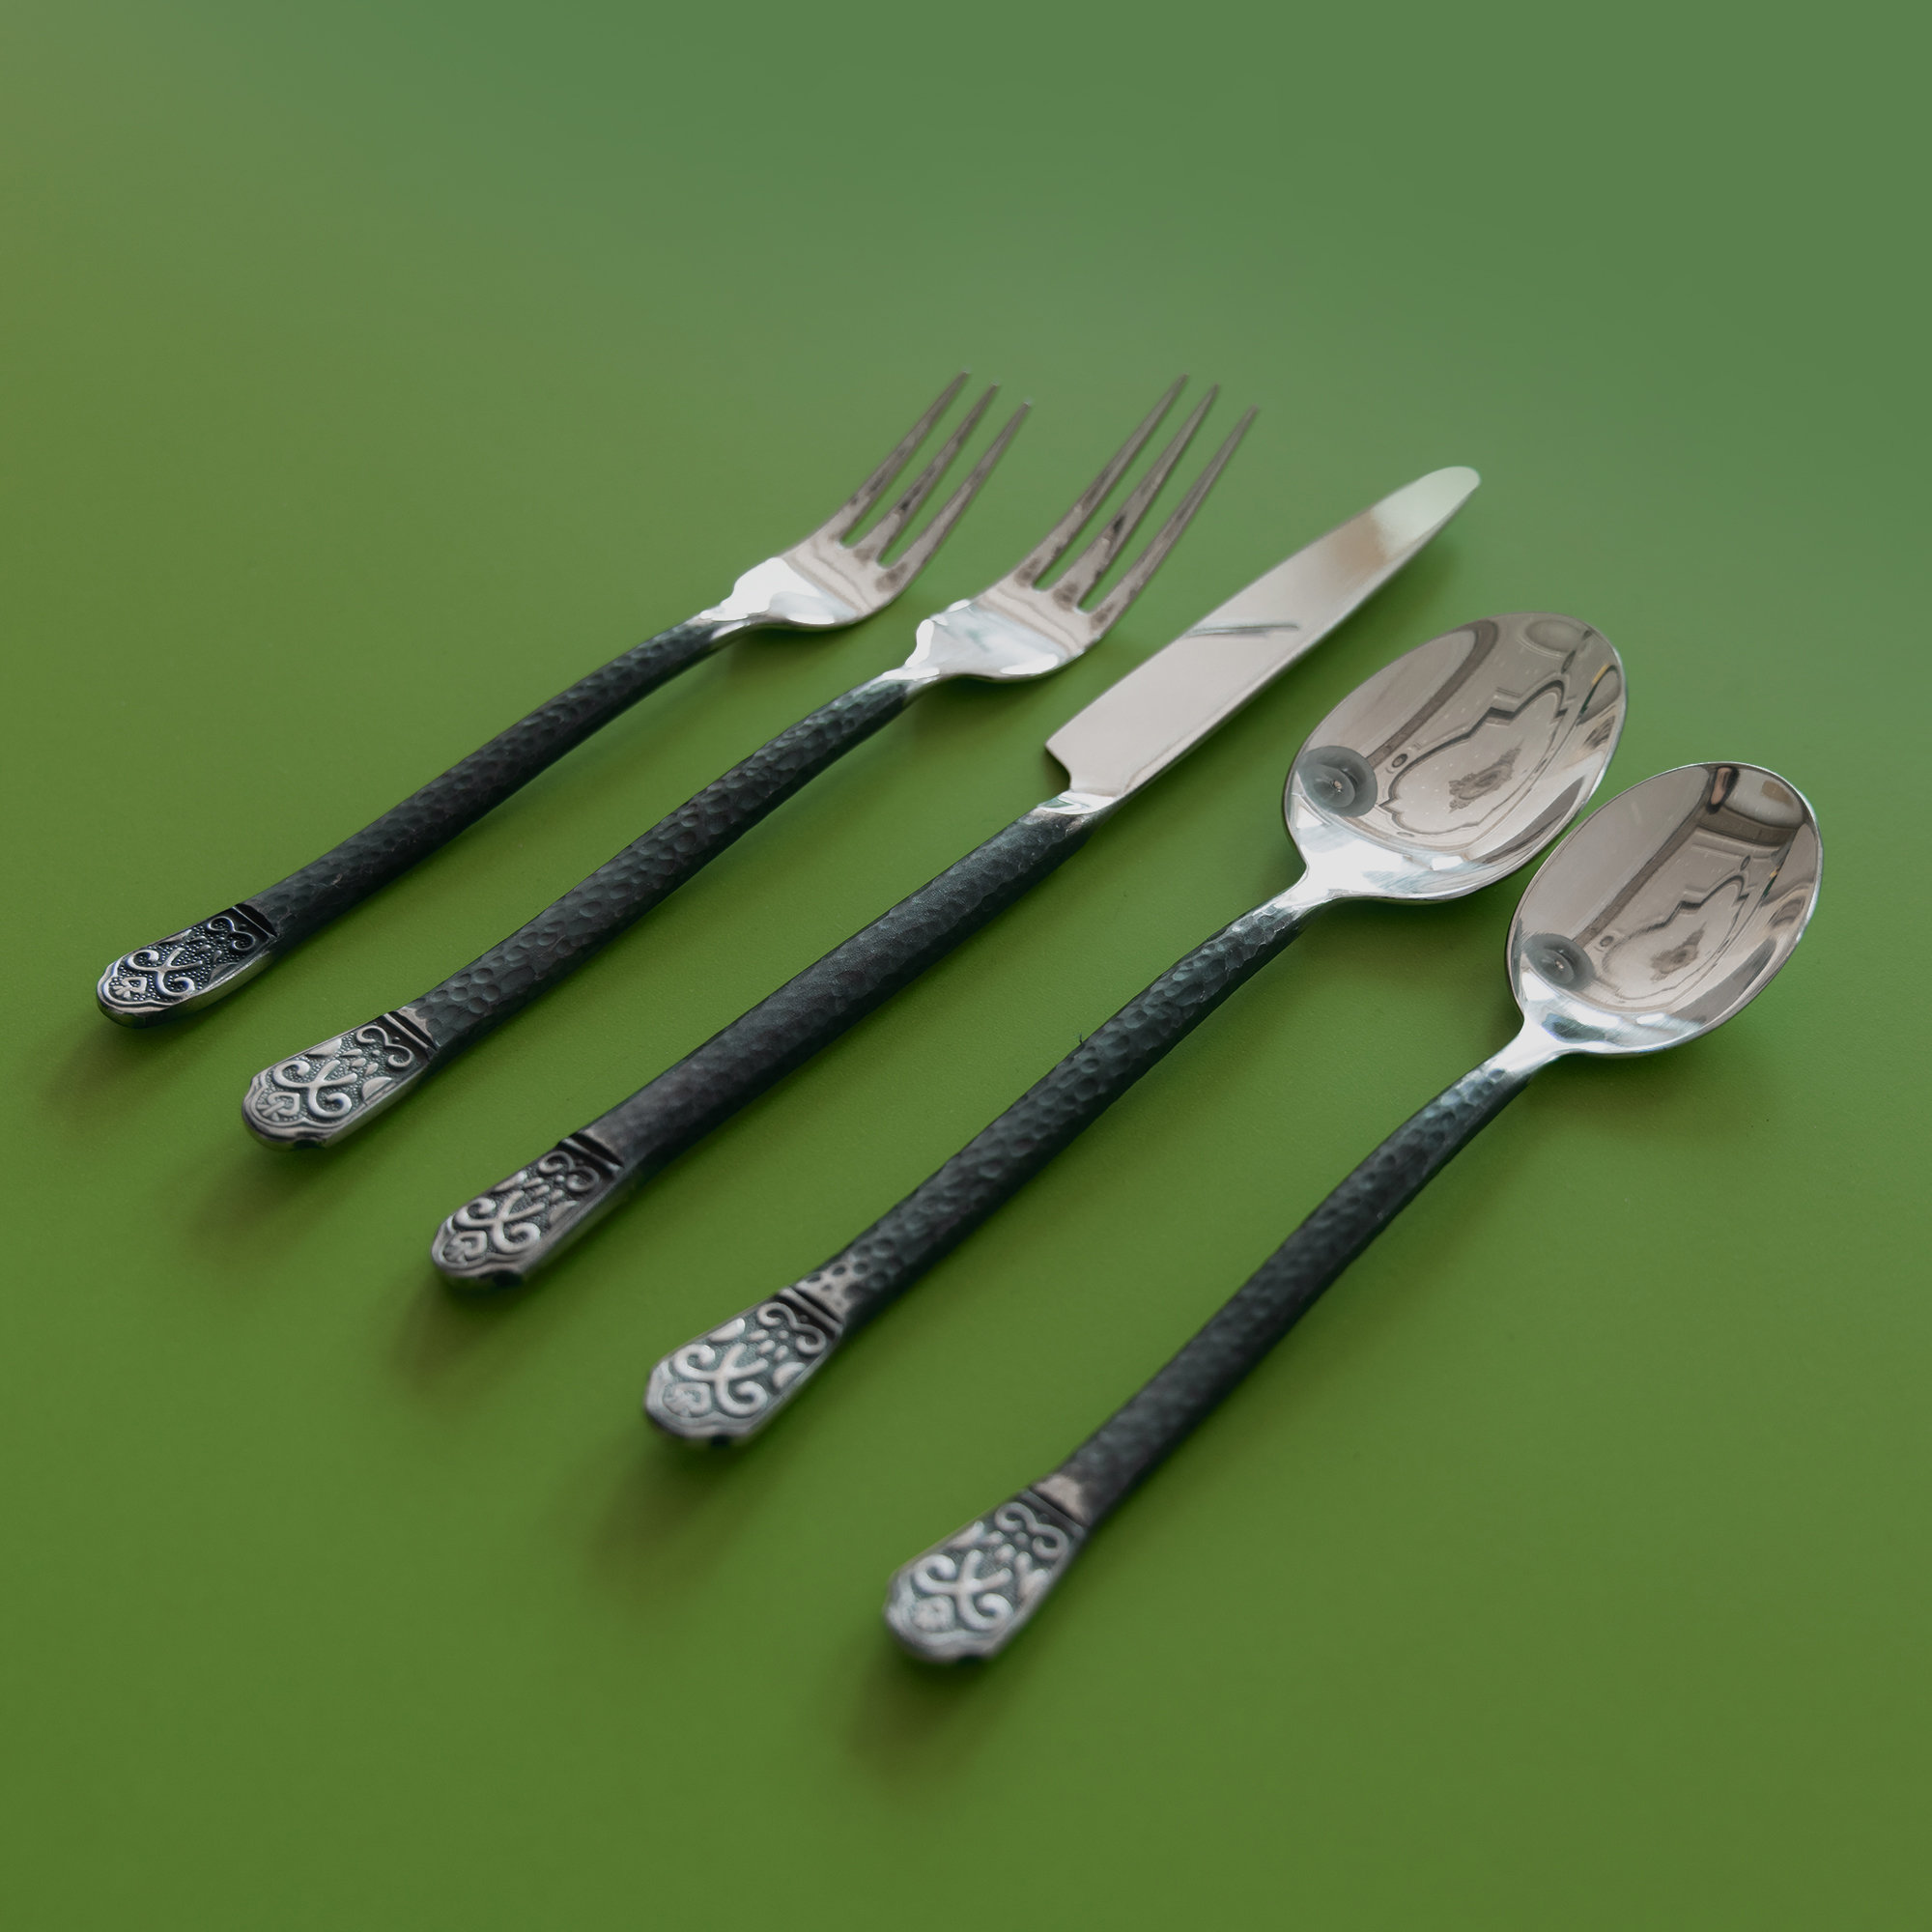 Buy ZWILLING Flatware Accessories Longdrink spoon set